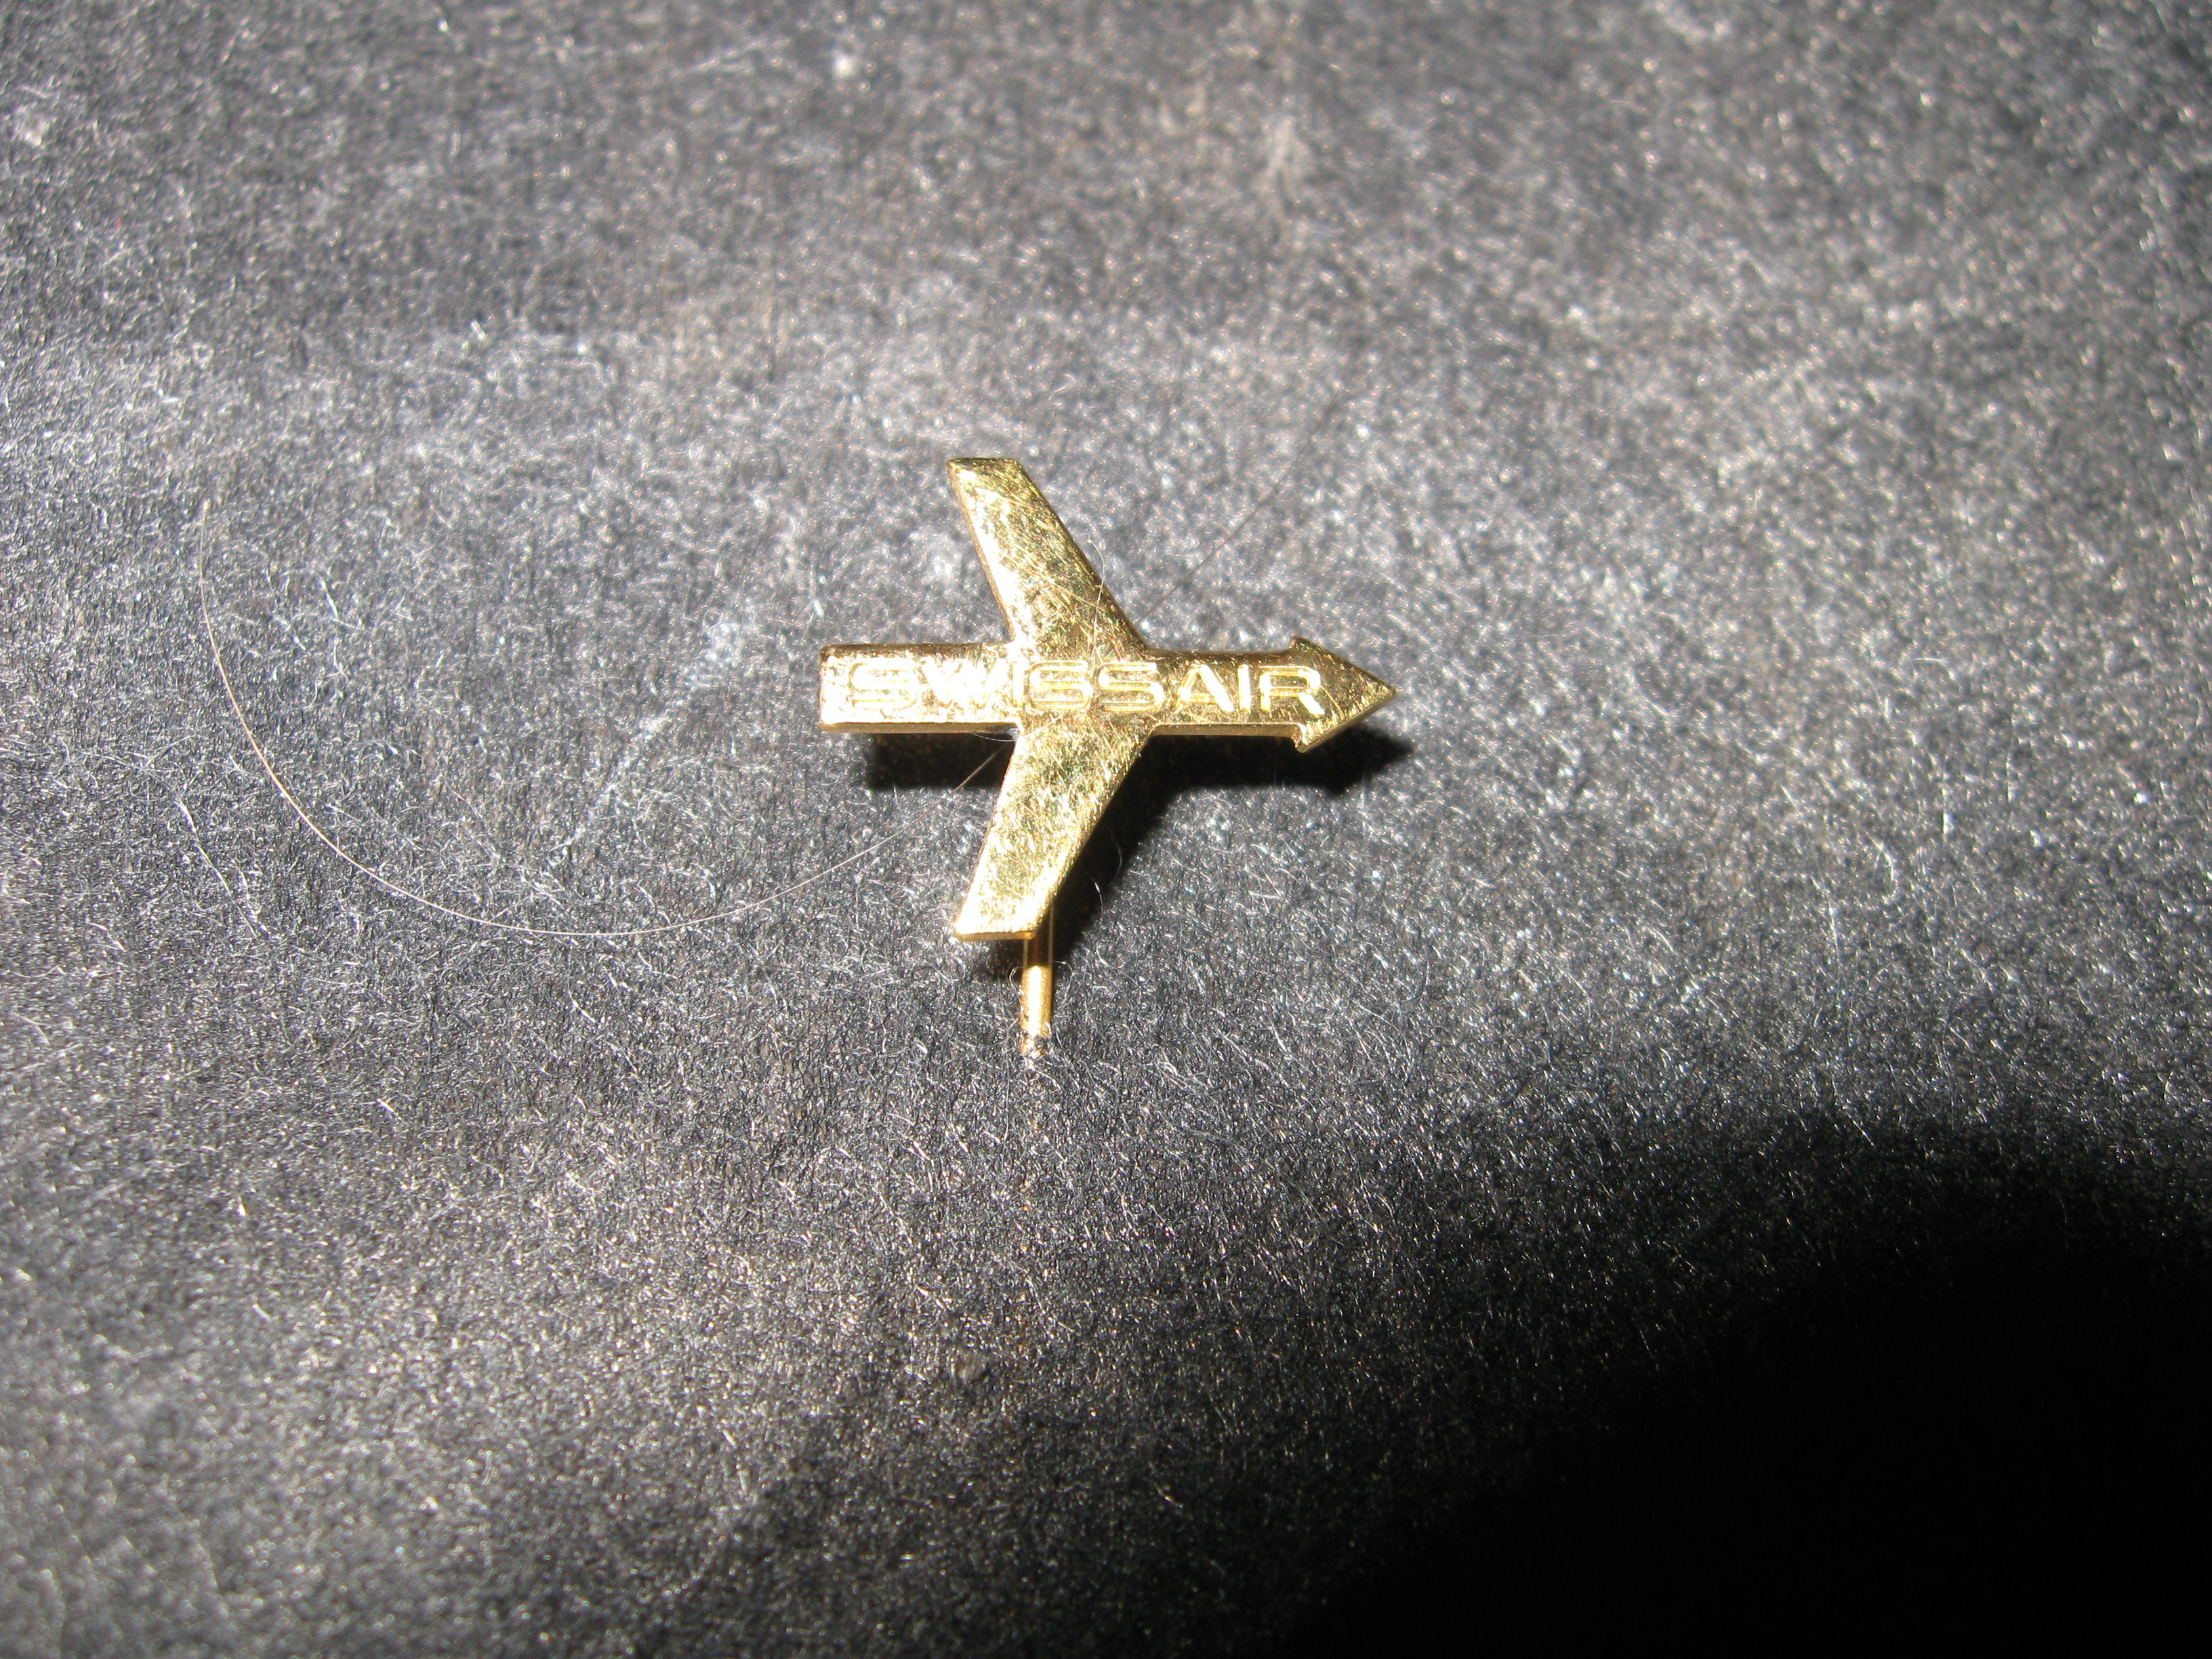 Swissair stick pin